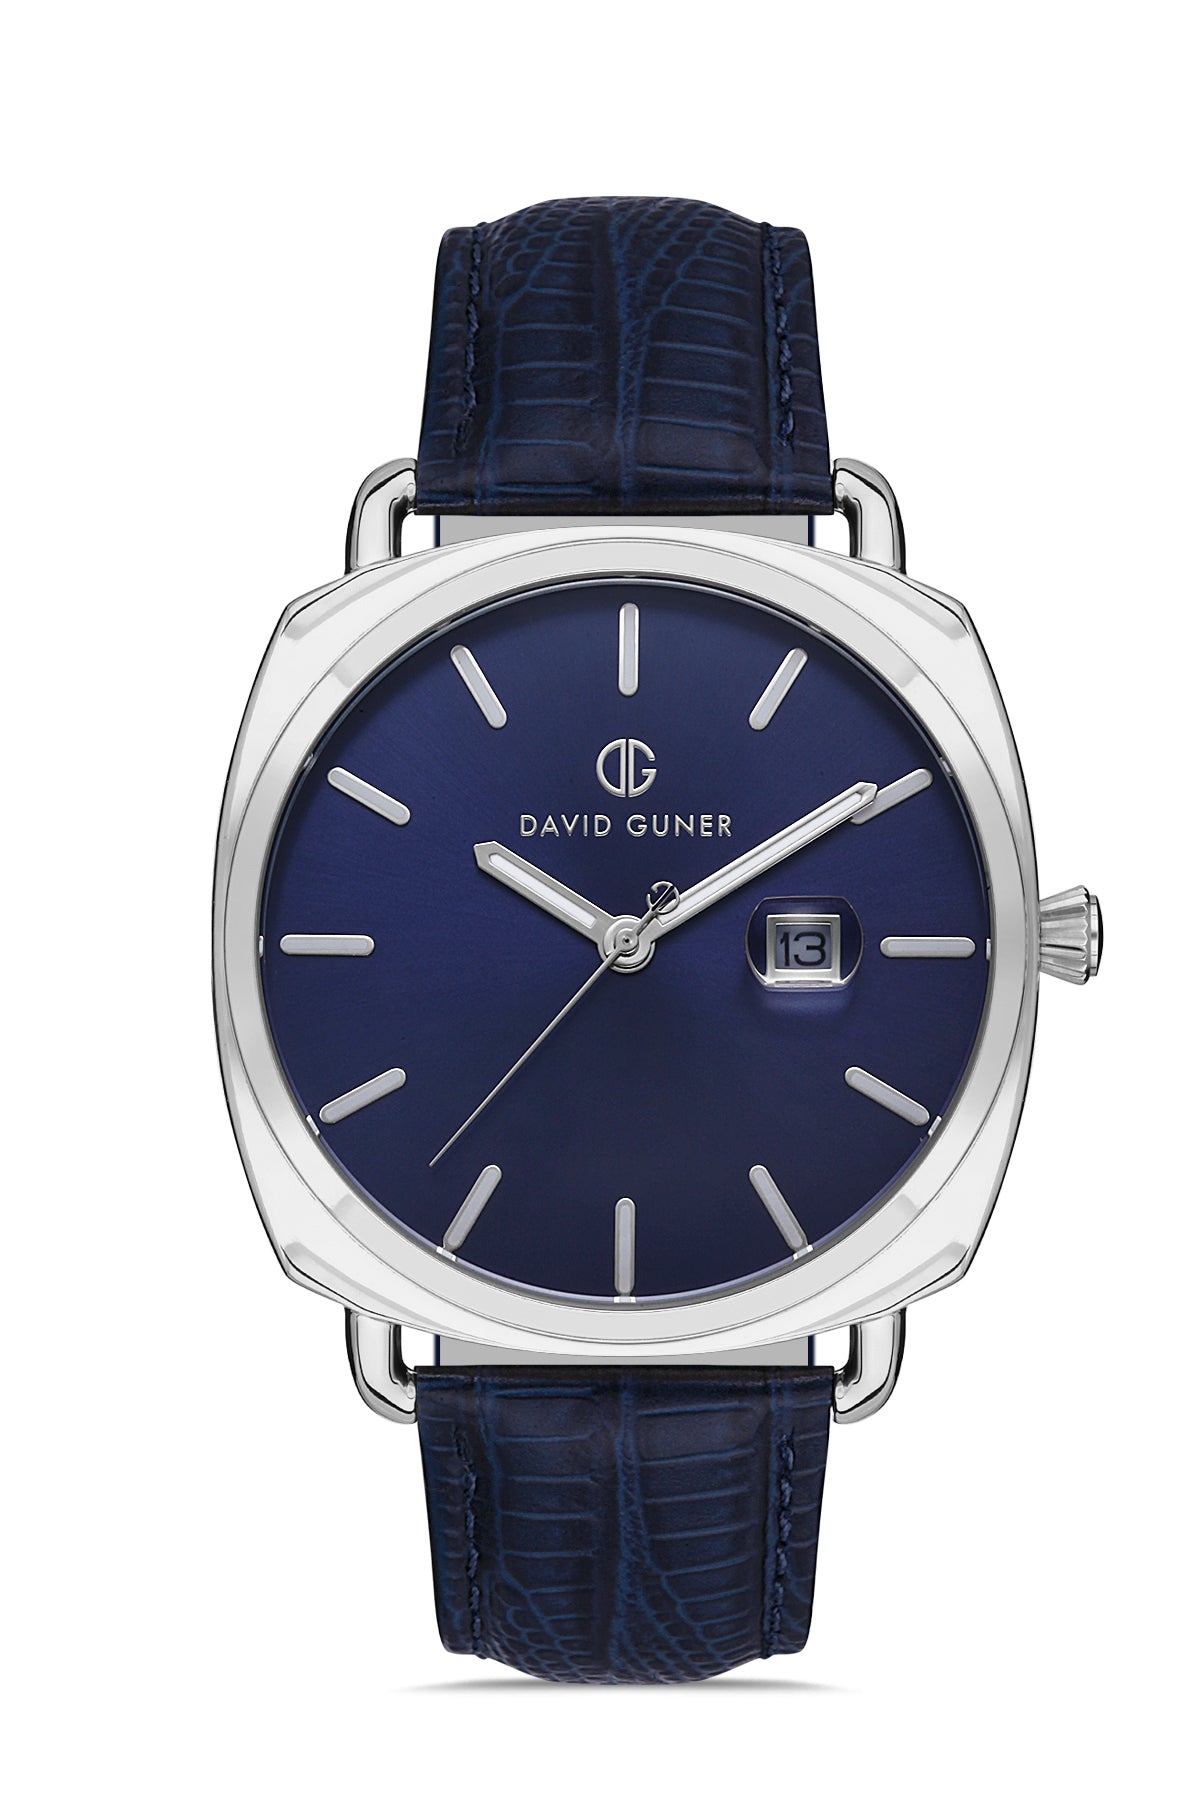 DAVID GUNER Blue Dial Silver Plated Men's Wristwatch